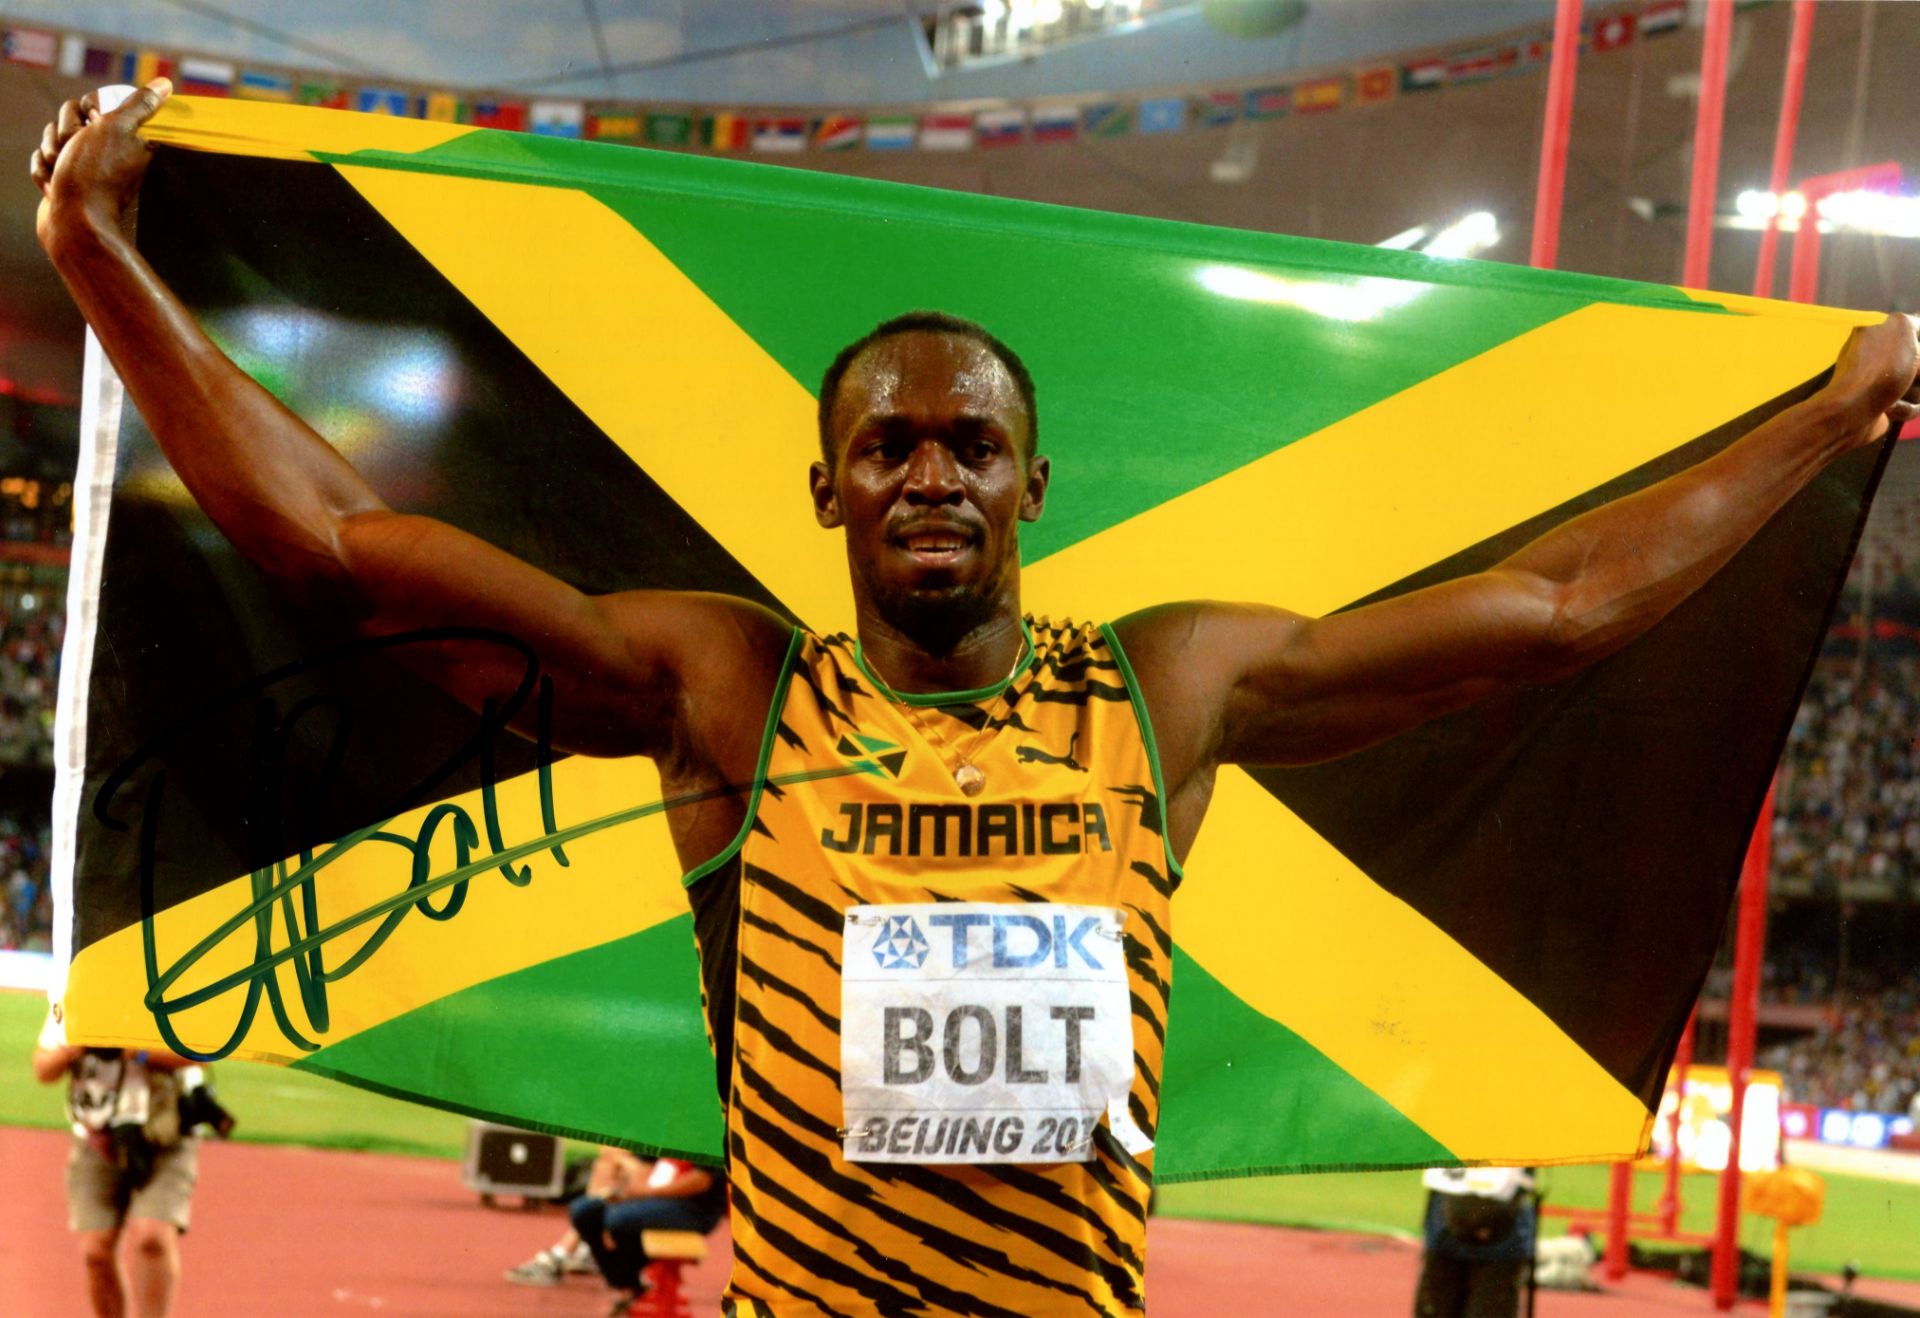 BOLT USAIN: (1986- ) Jamaican Sprinter, known as ''Lightning Bolt''.